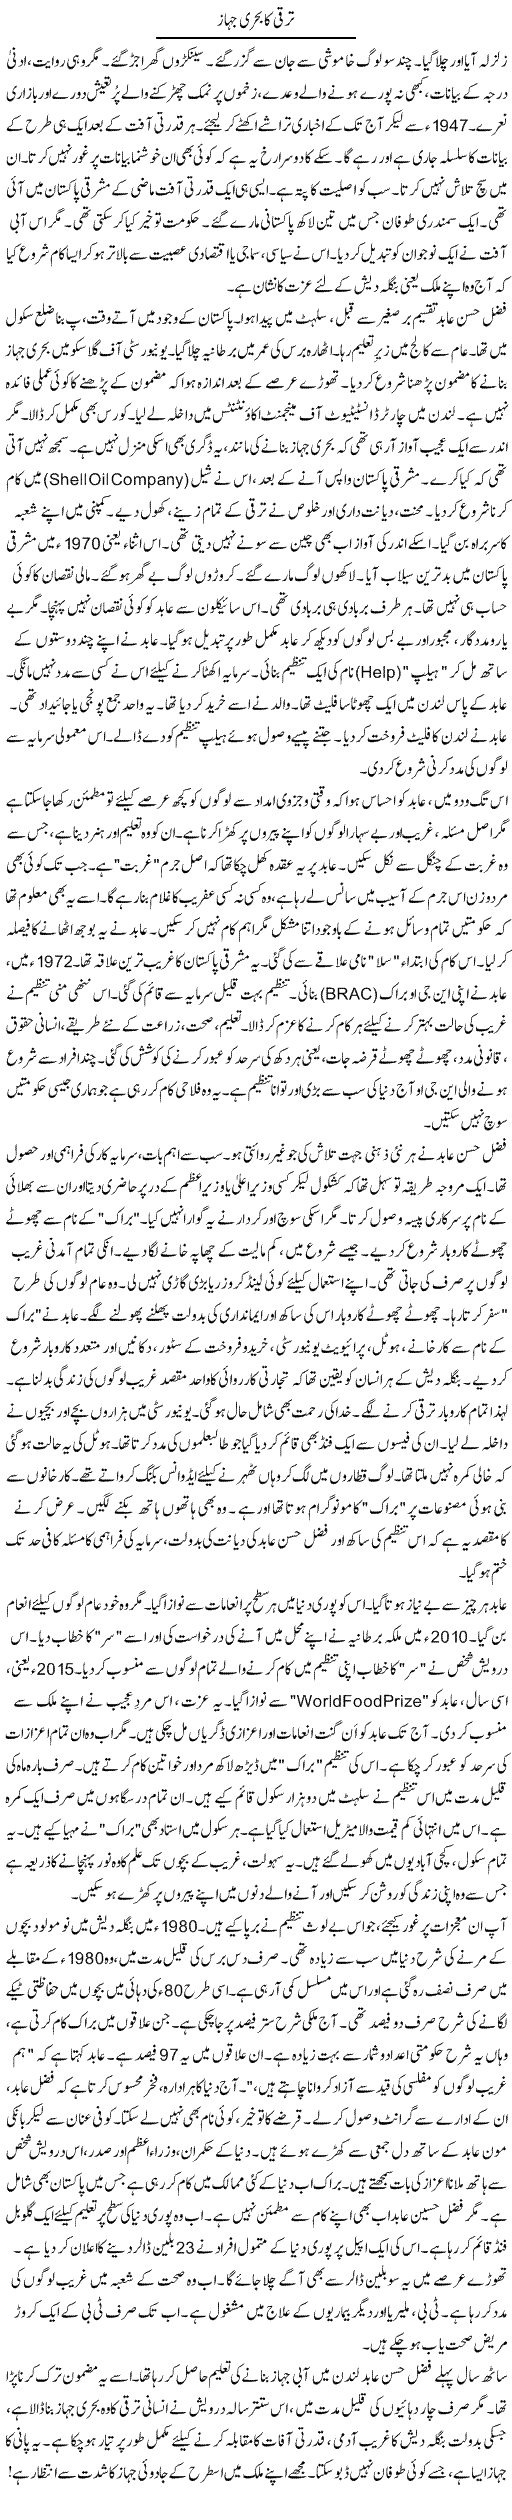 Taraqqi Ka Behri Jahaaz | Rao Manzar Hayat | Daily Urdu Columns